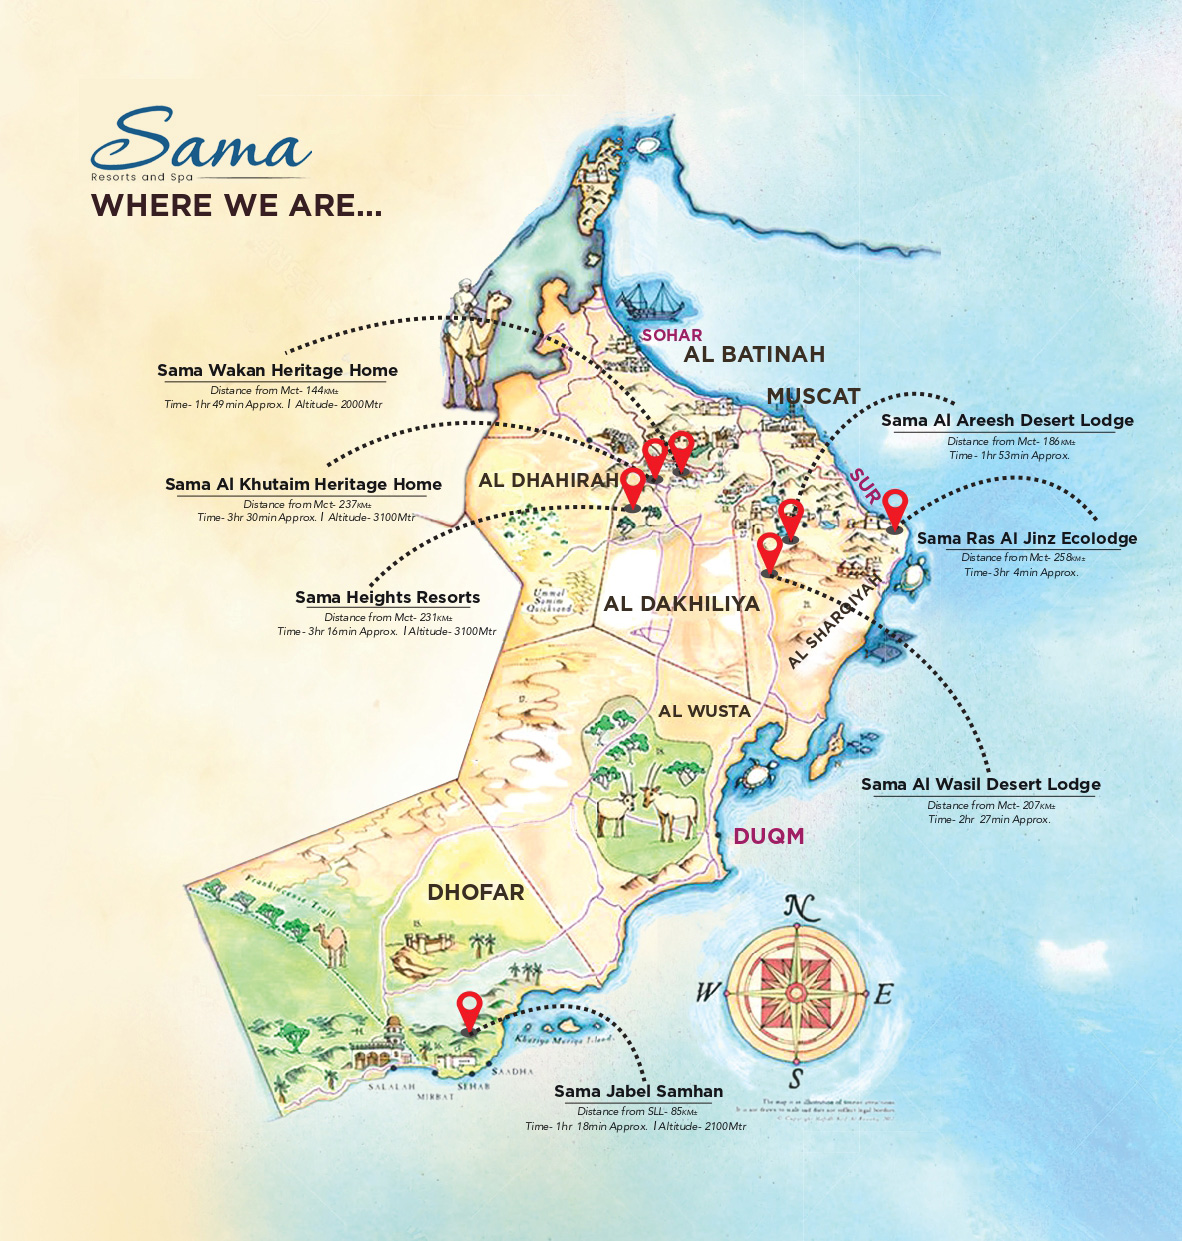 Sama Resorts and Spa